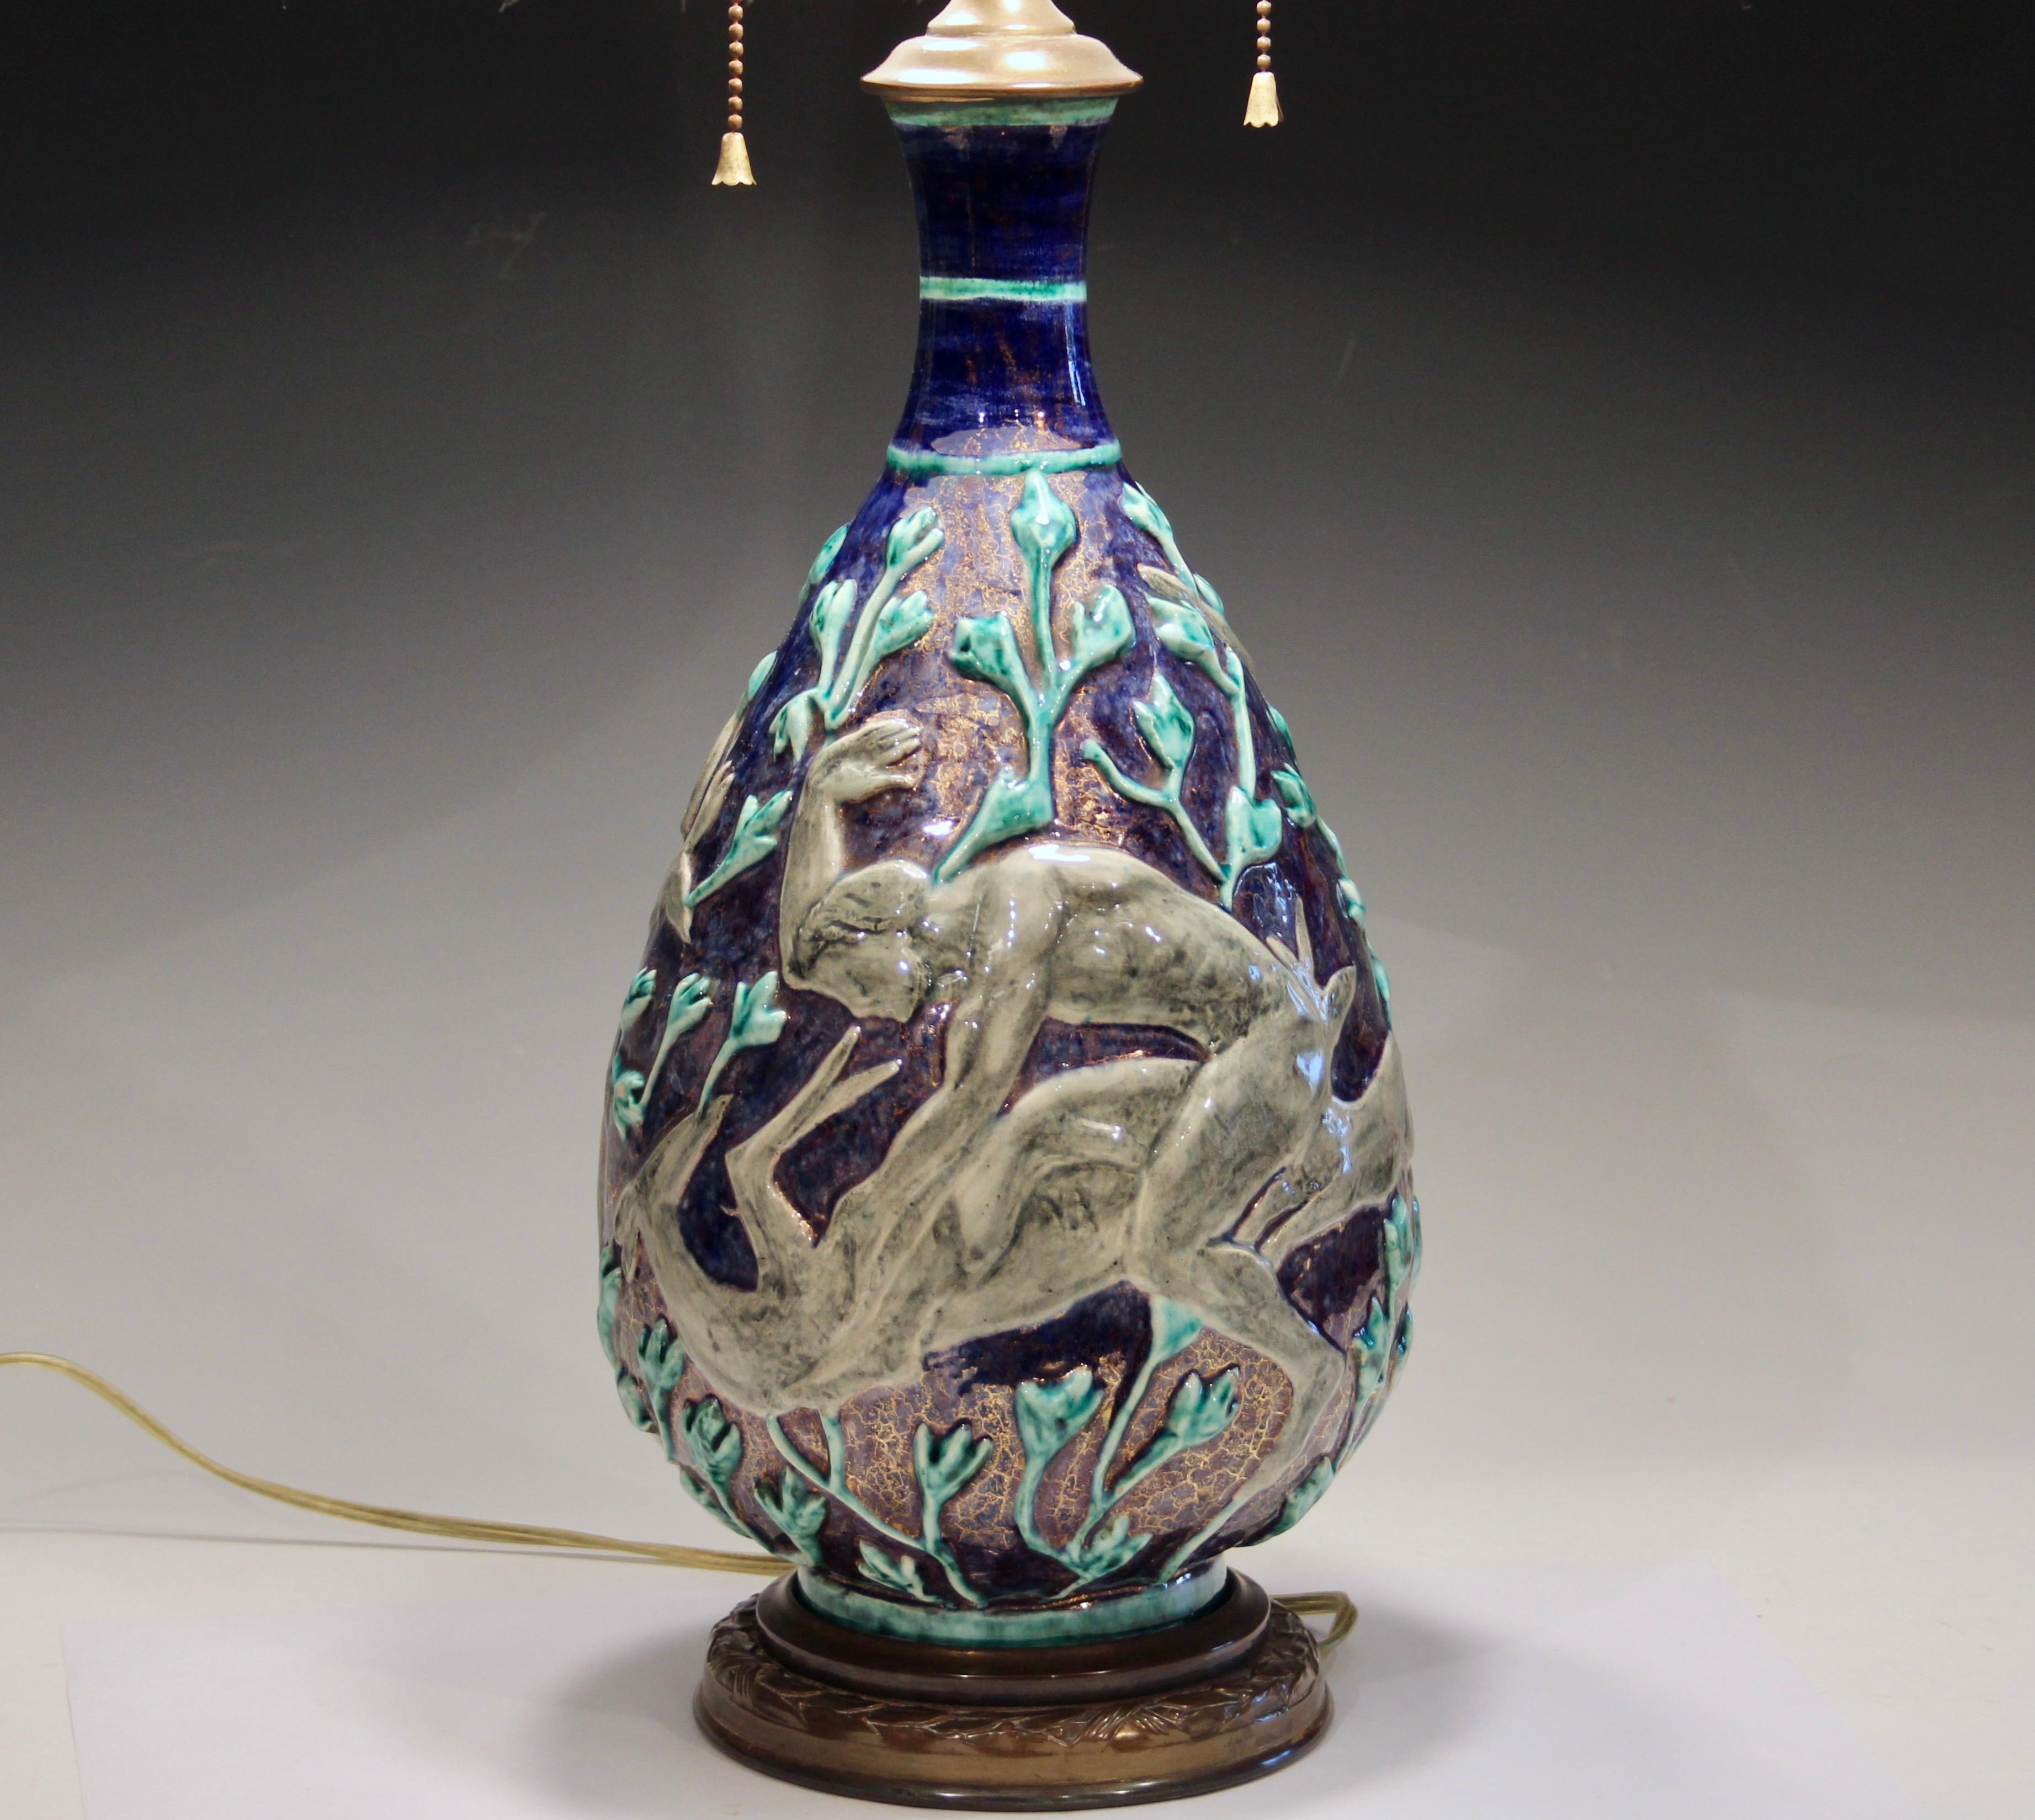 Molded Jean Mayodon French Art Deco Gilt Pottery Vintage 1920s Vase Lamp For Sale